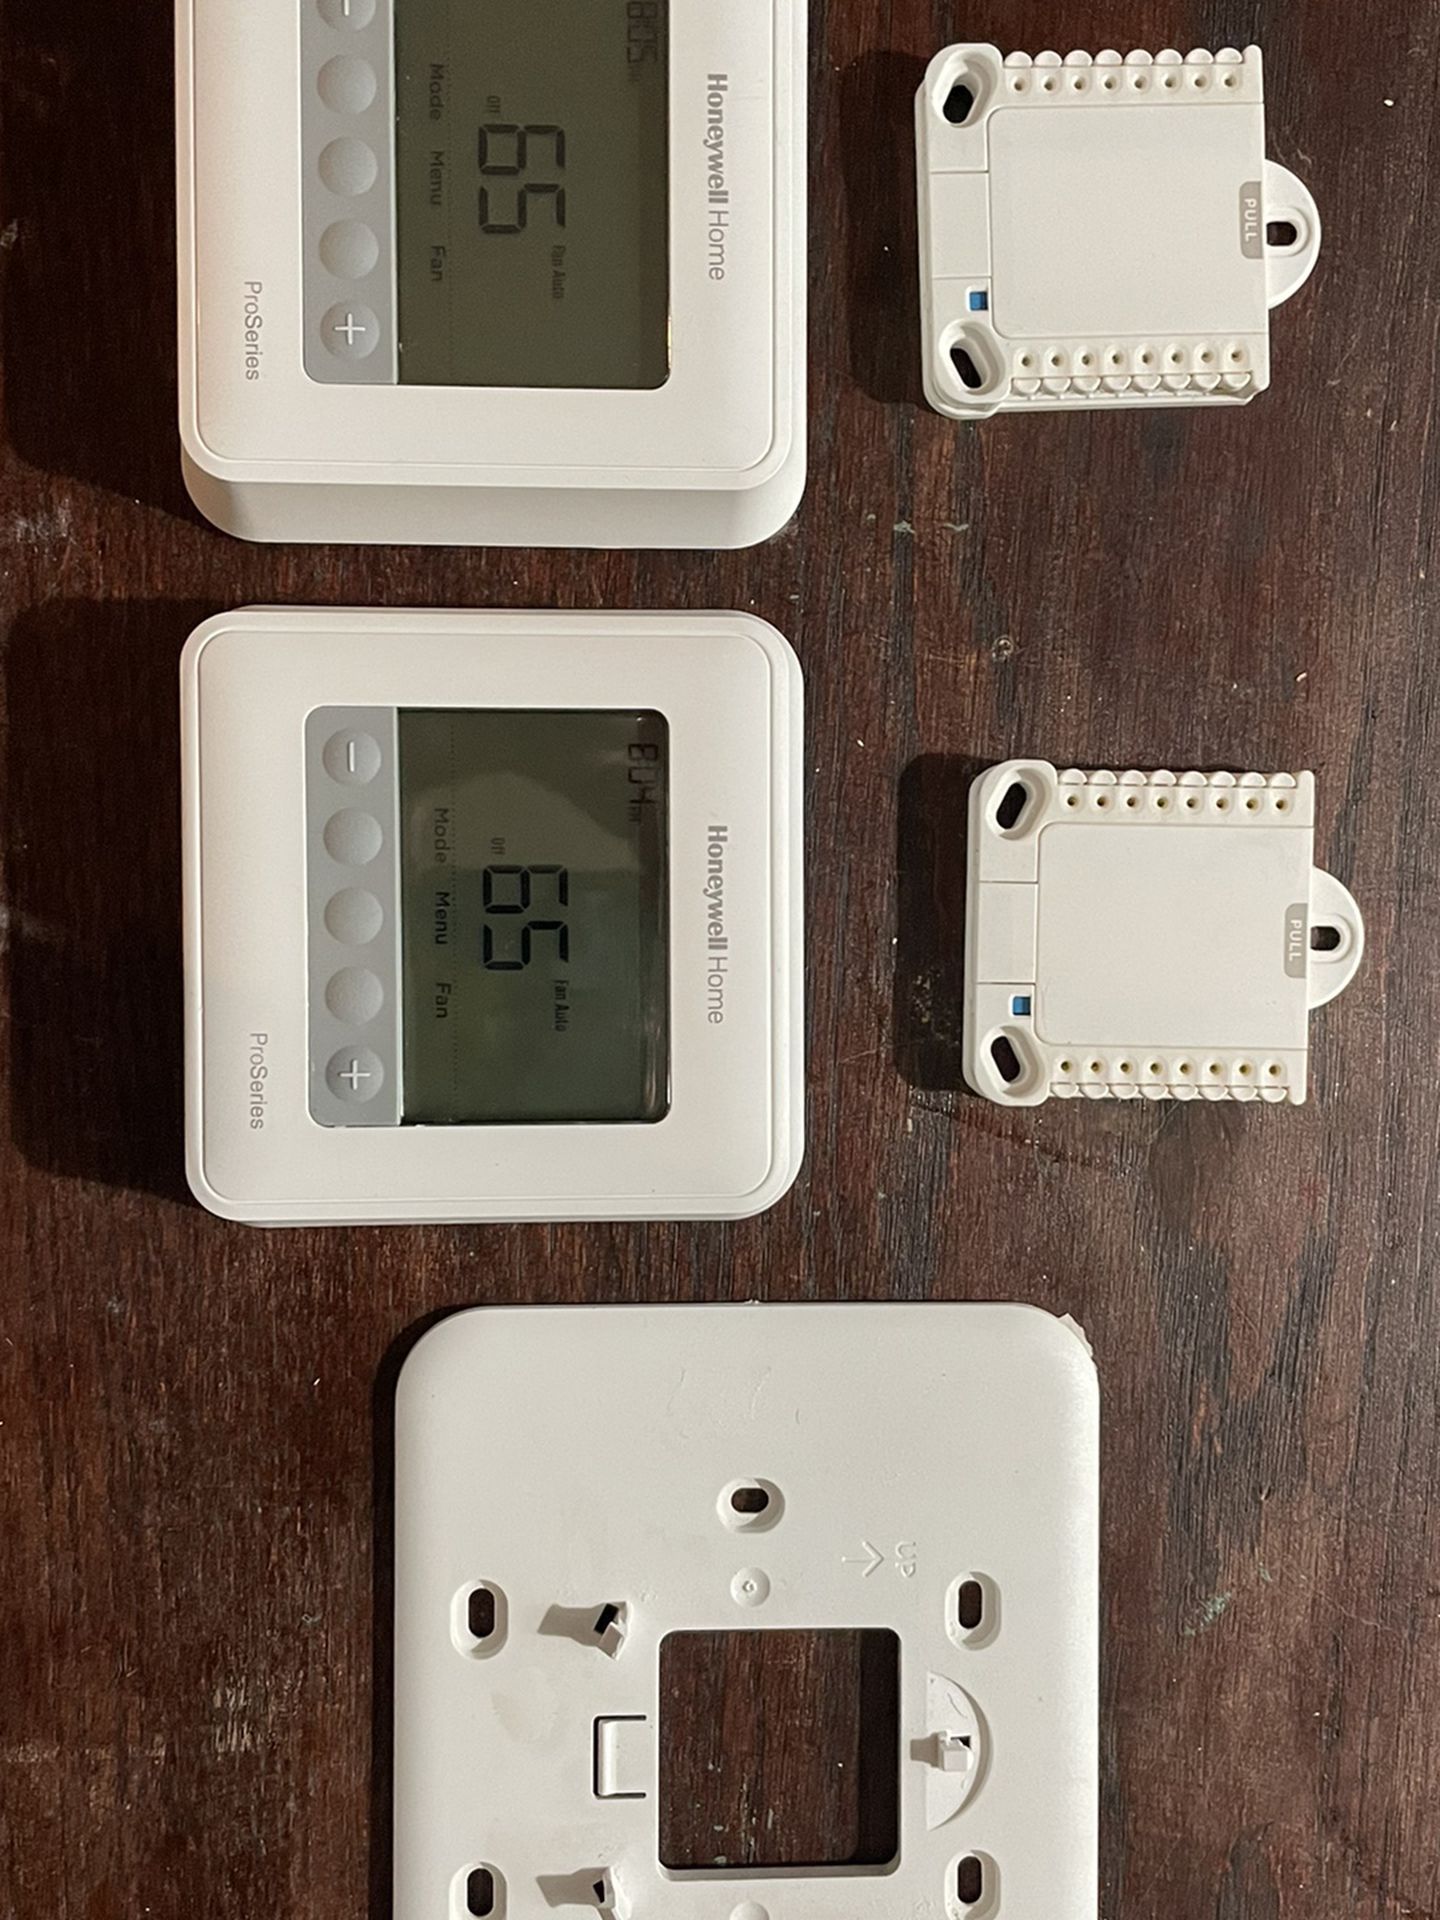 Honeywell Pro Series Thermostats